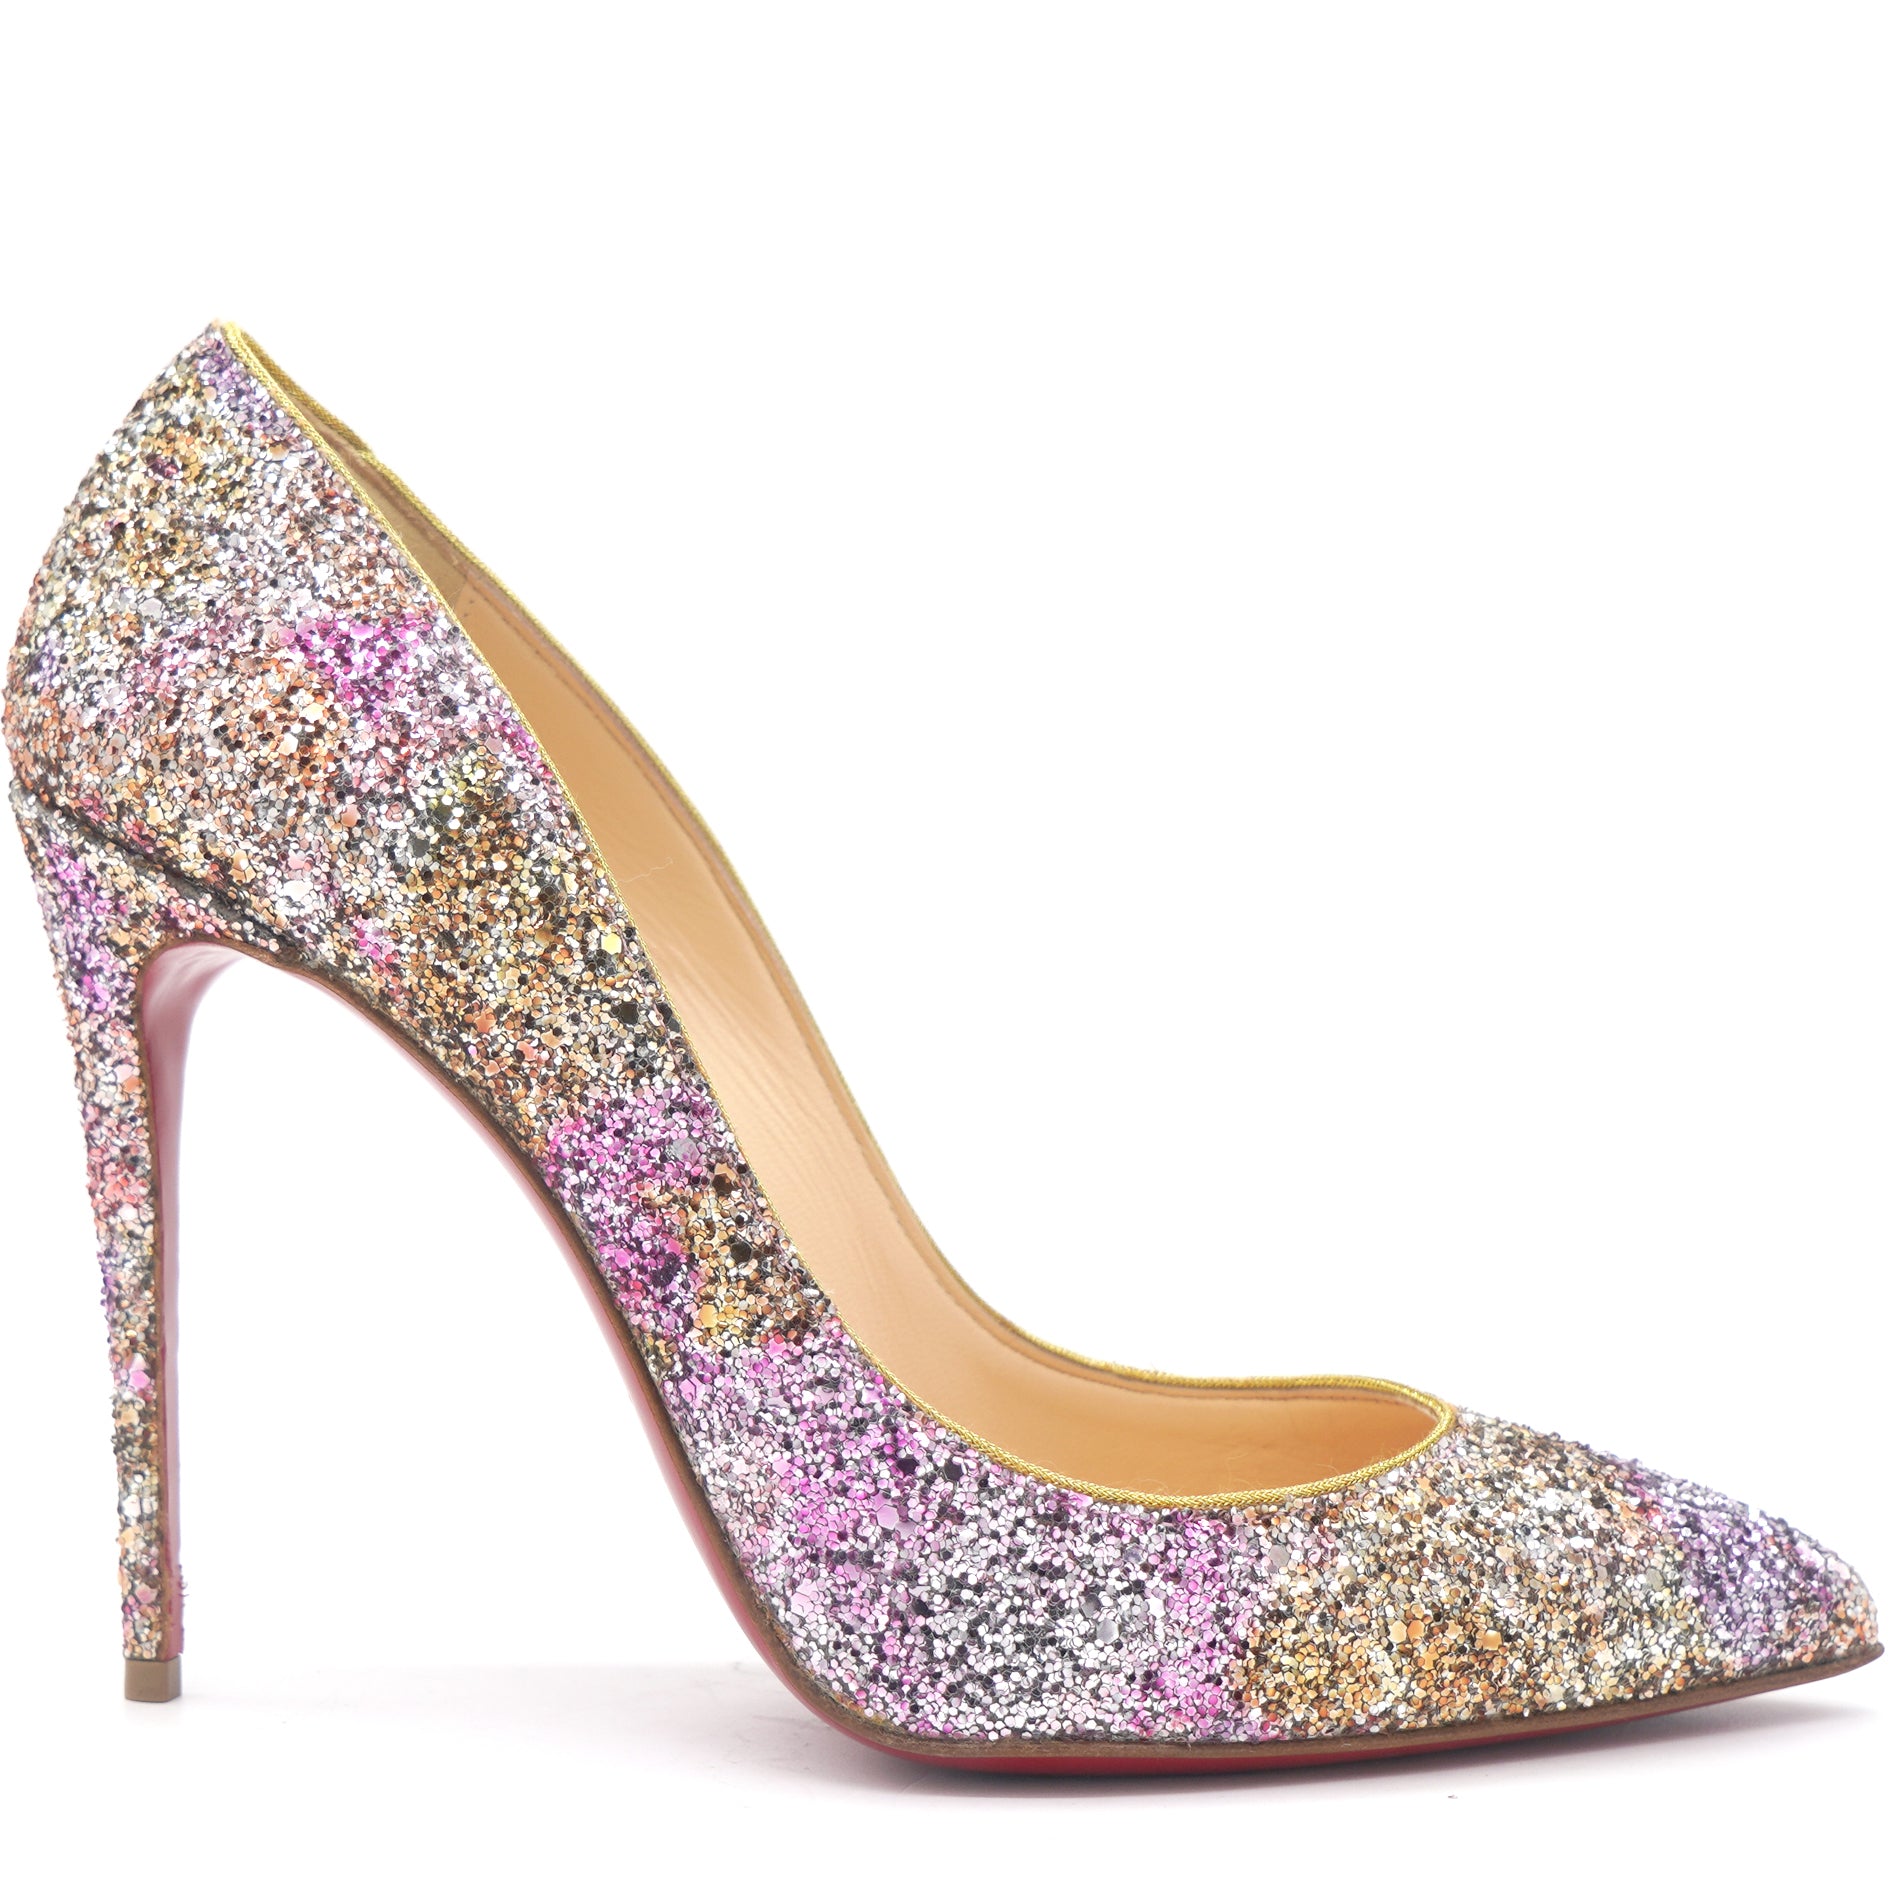 Do you prefer flats, 3 inch heels or 5 inch heels? - Quora